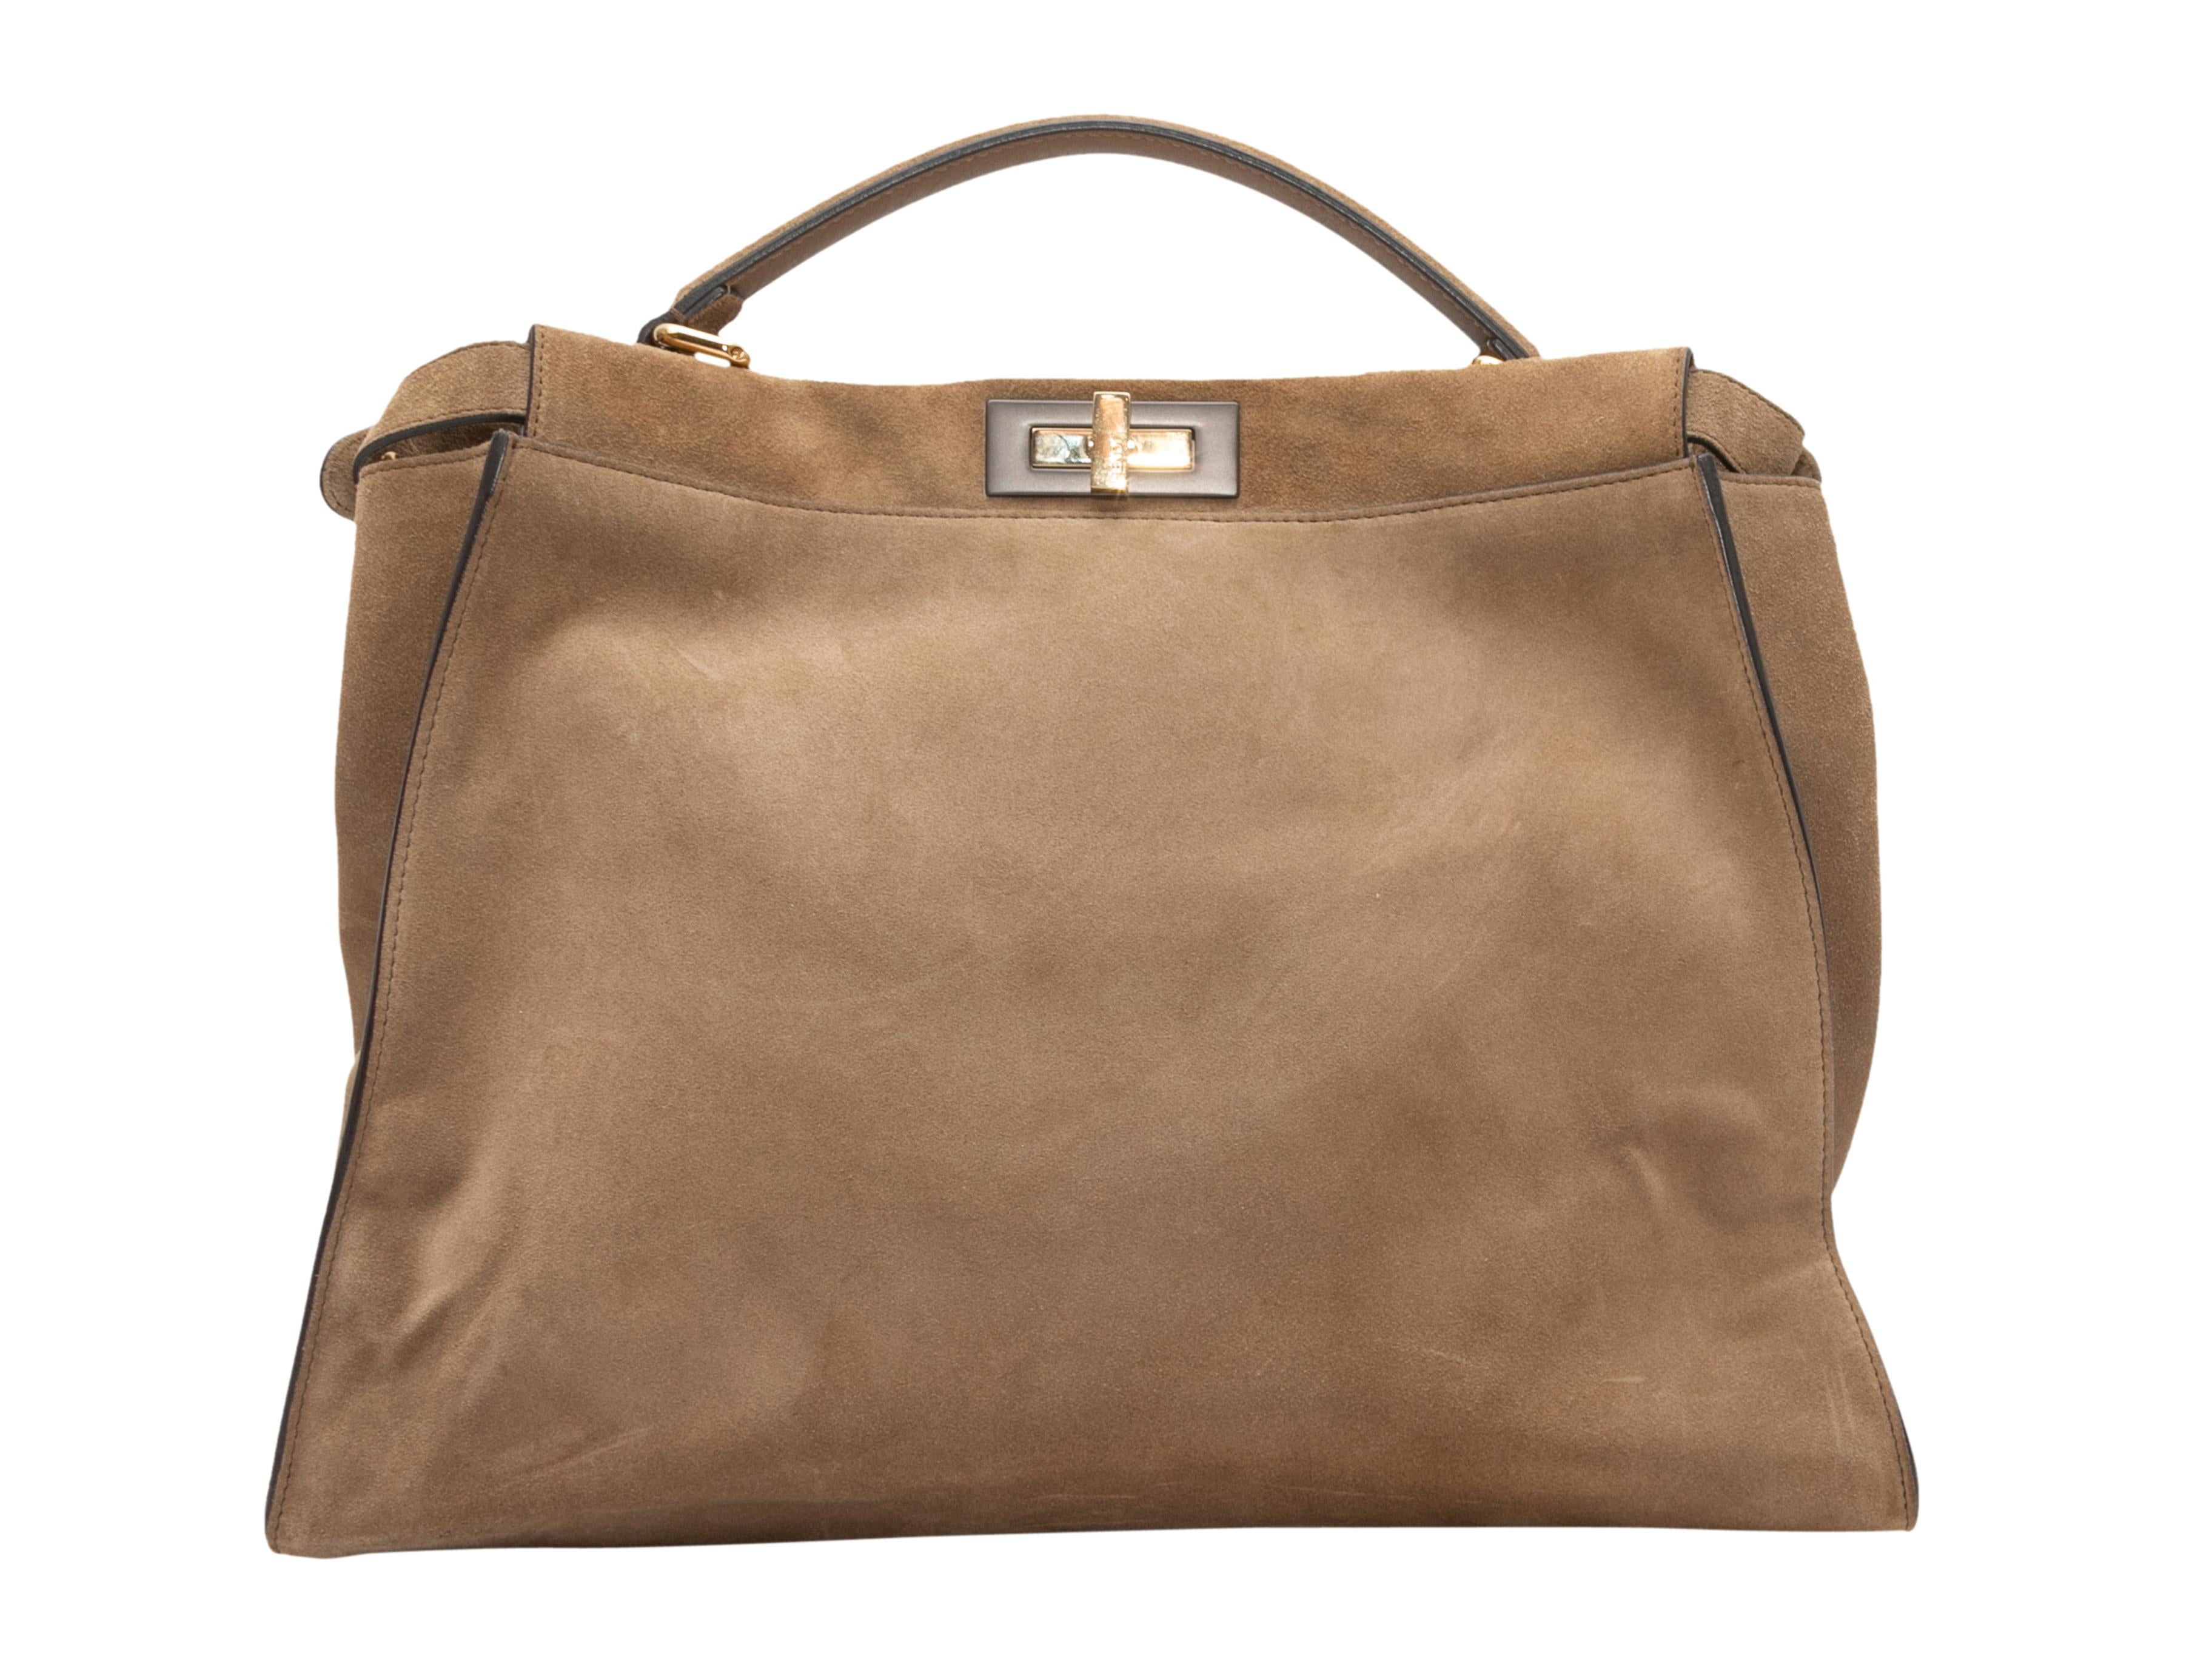 Tan & Multicolor Fendi Peekaboo Painted Handbag In Good Condition For Sale In New York, NY